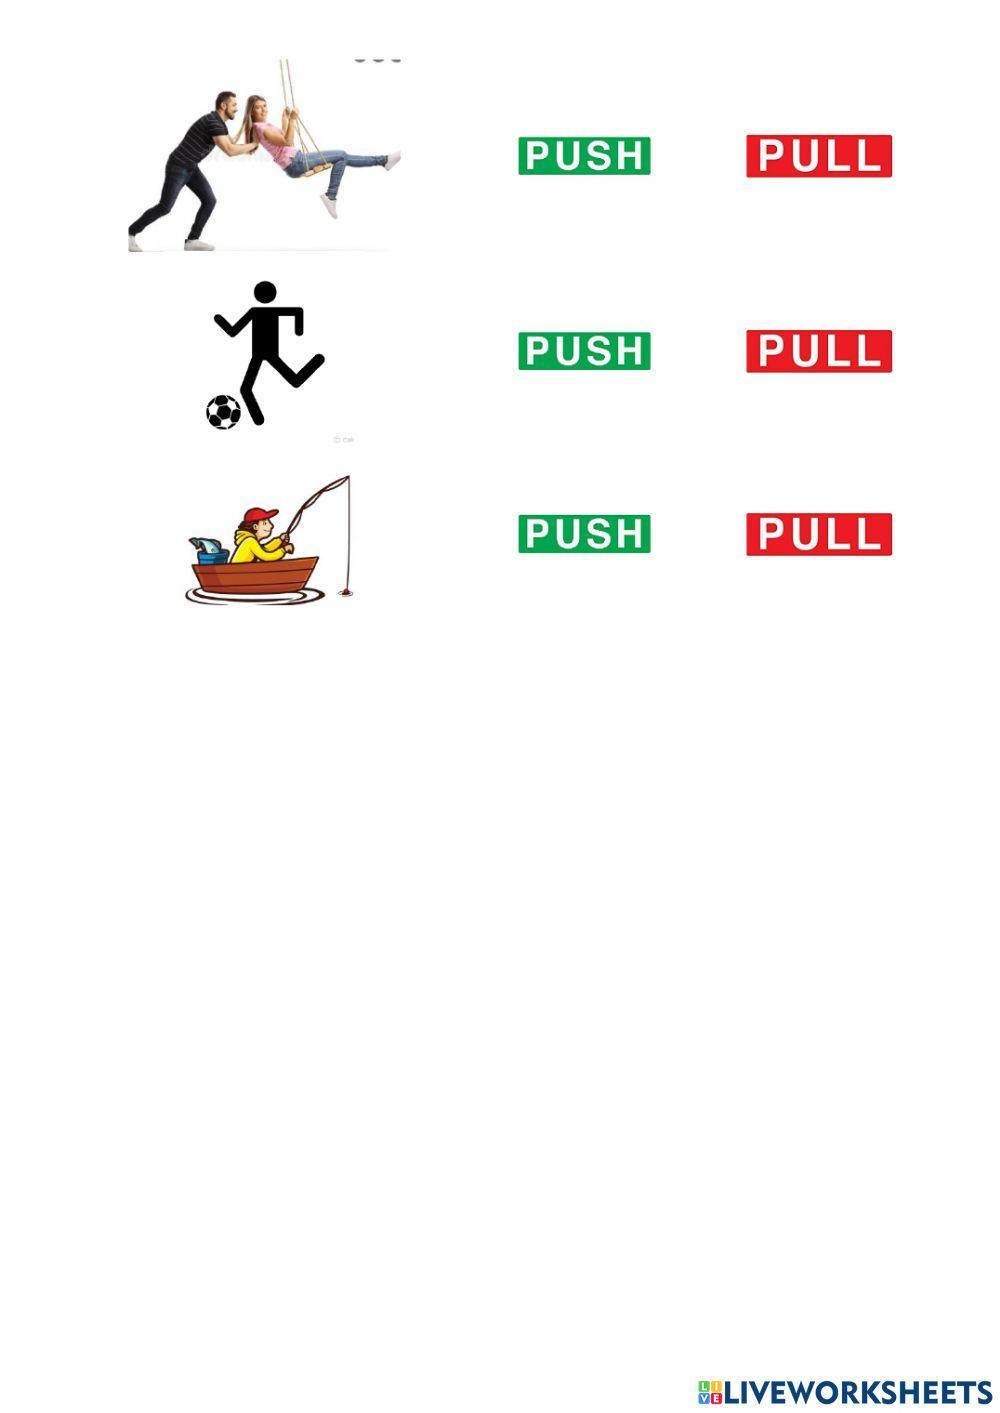 Push or pull